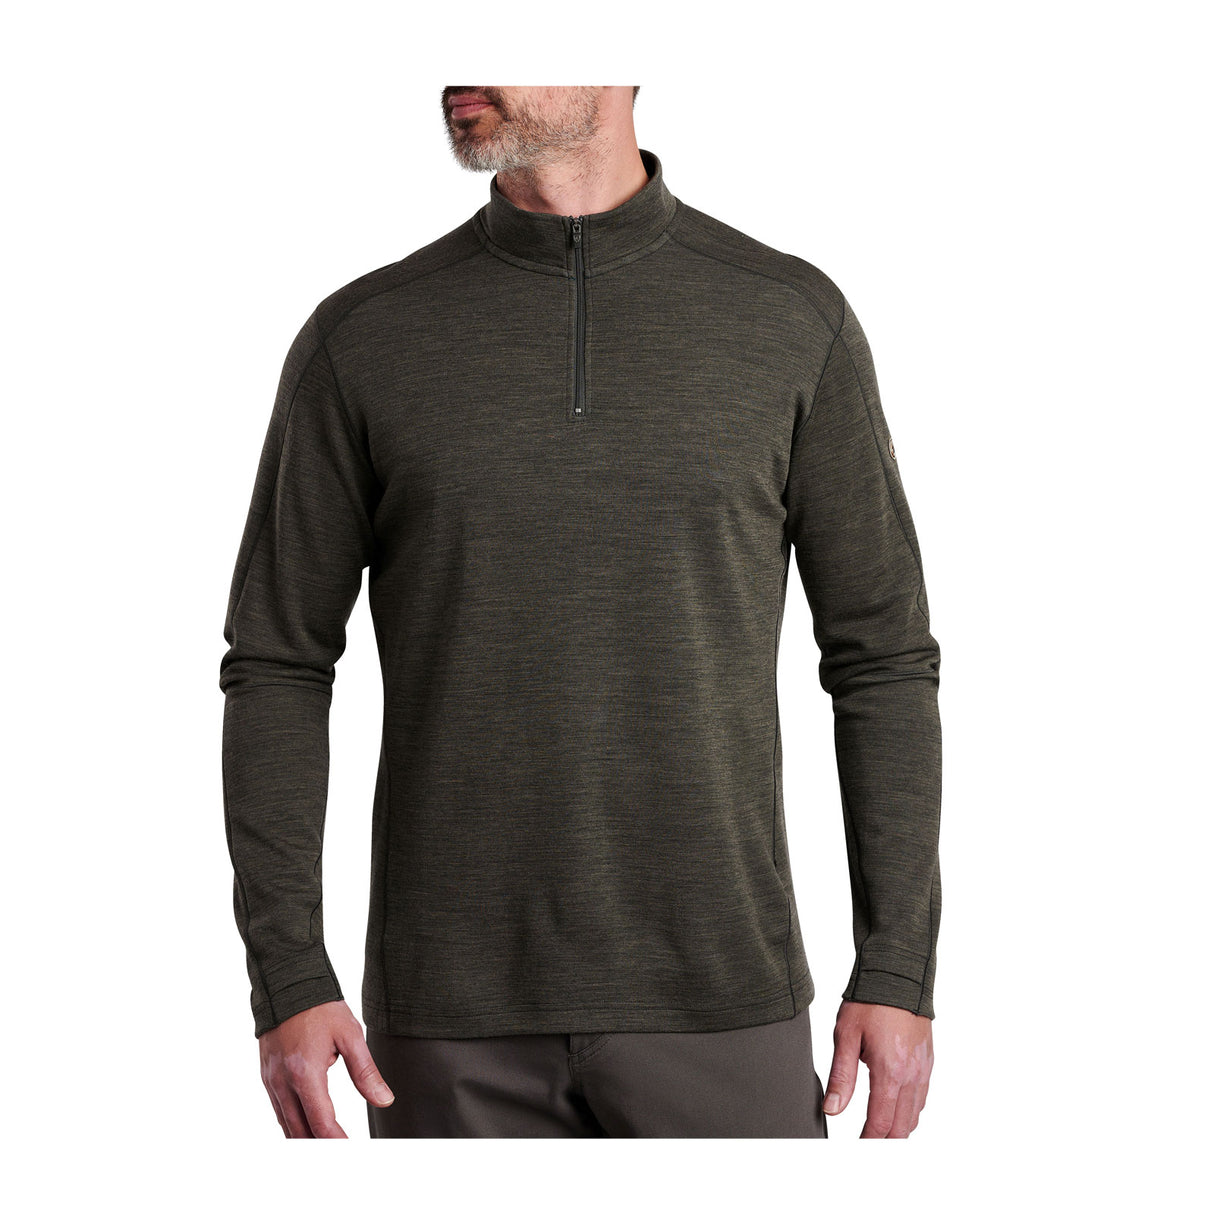 Kuhl Invigoratr 1/4 Zip Sweater (Men) - Olive